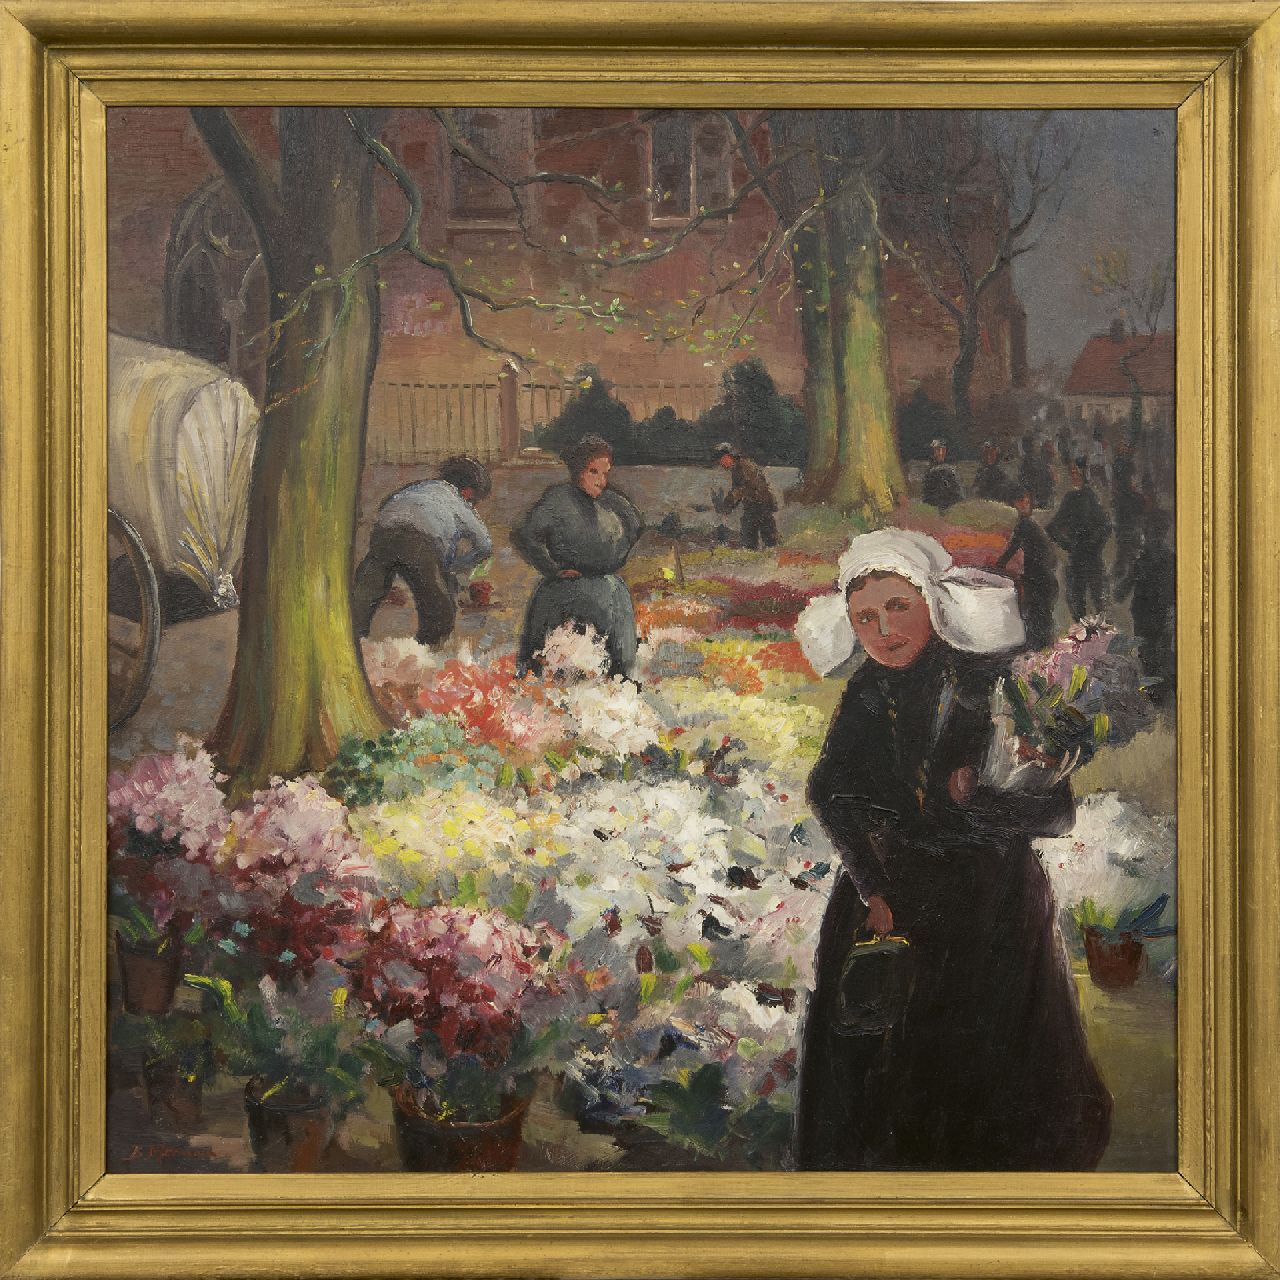 Moonen B.F.A.  | Bernardus Franciscus Aloijsius ‘Ben’ Moonen | Paintings offered for sale | Flower market, oil on panel 80.3 x 80.0 cm, signed l.l.